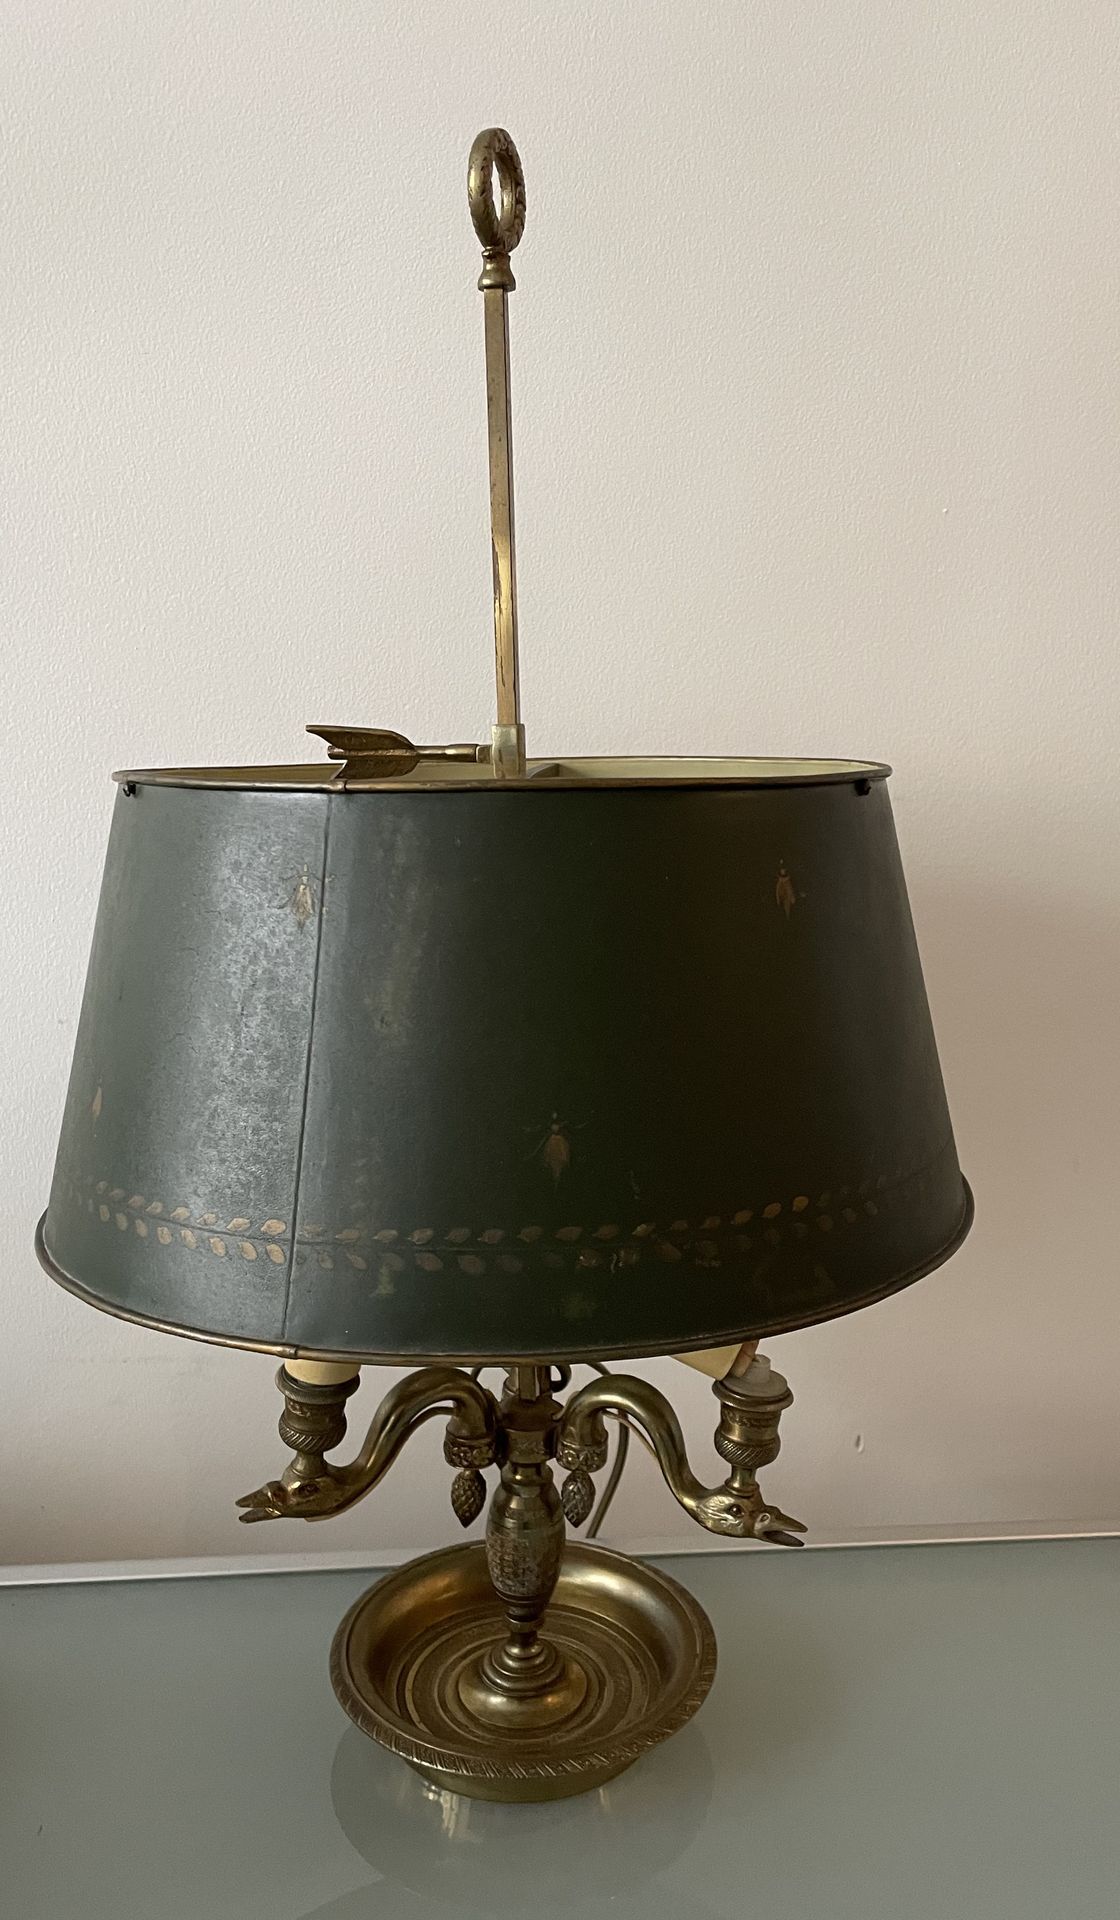 LAMPE BOUILLOTTE EN MÉTAL BOUILLOTTE-LAMPE aus Metall mit drei Lichtarmen in Sch&hellip;